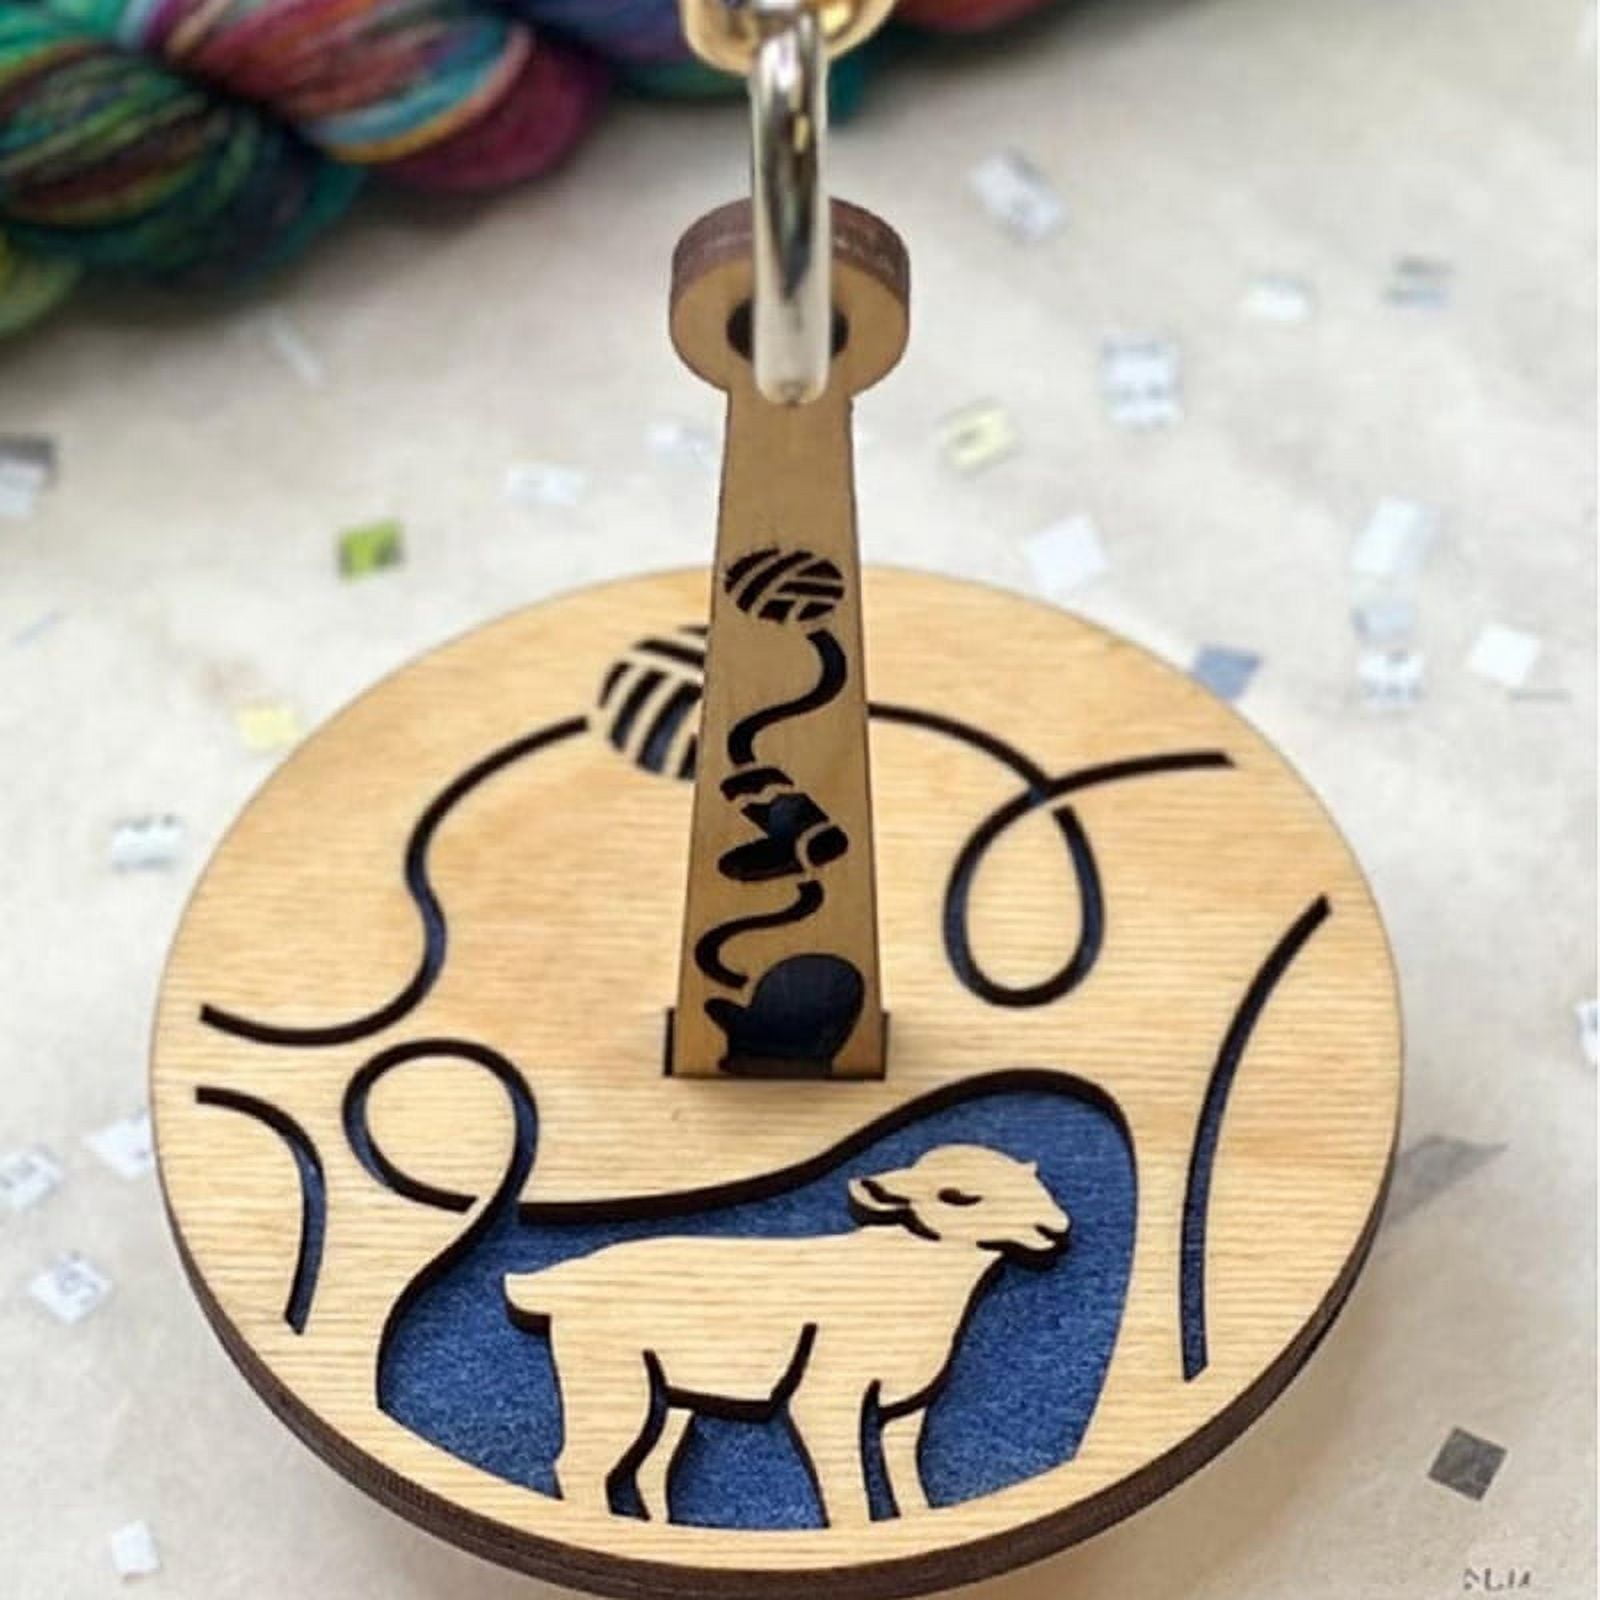  KLOOYO Yarn Holder for Crocheting, Wooden rotatable